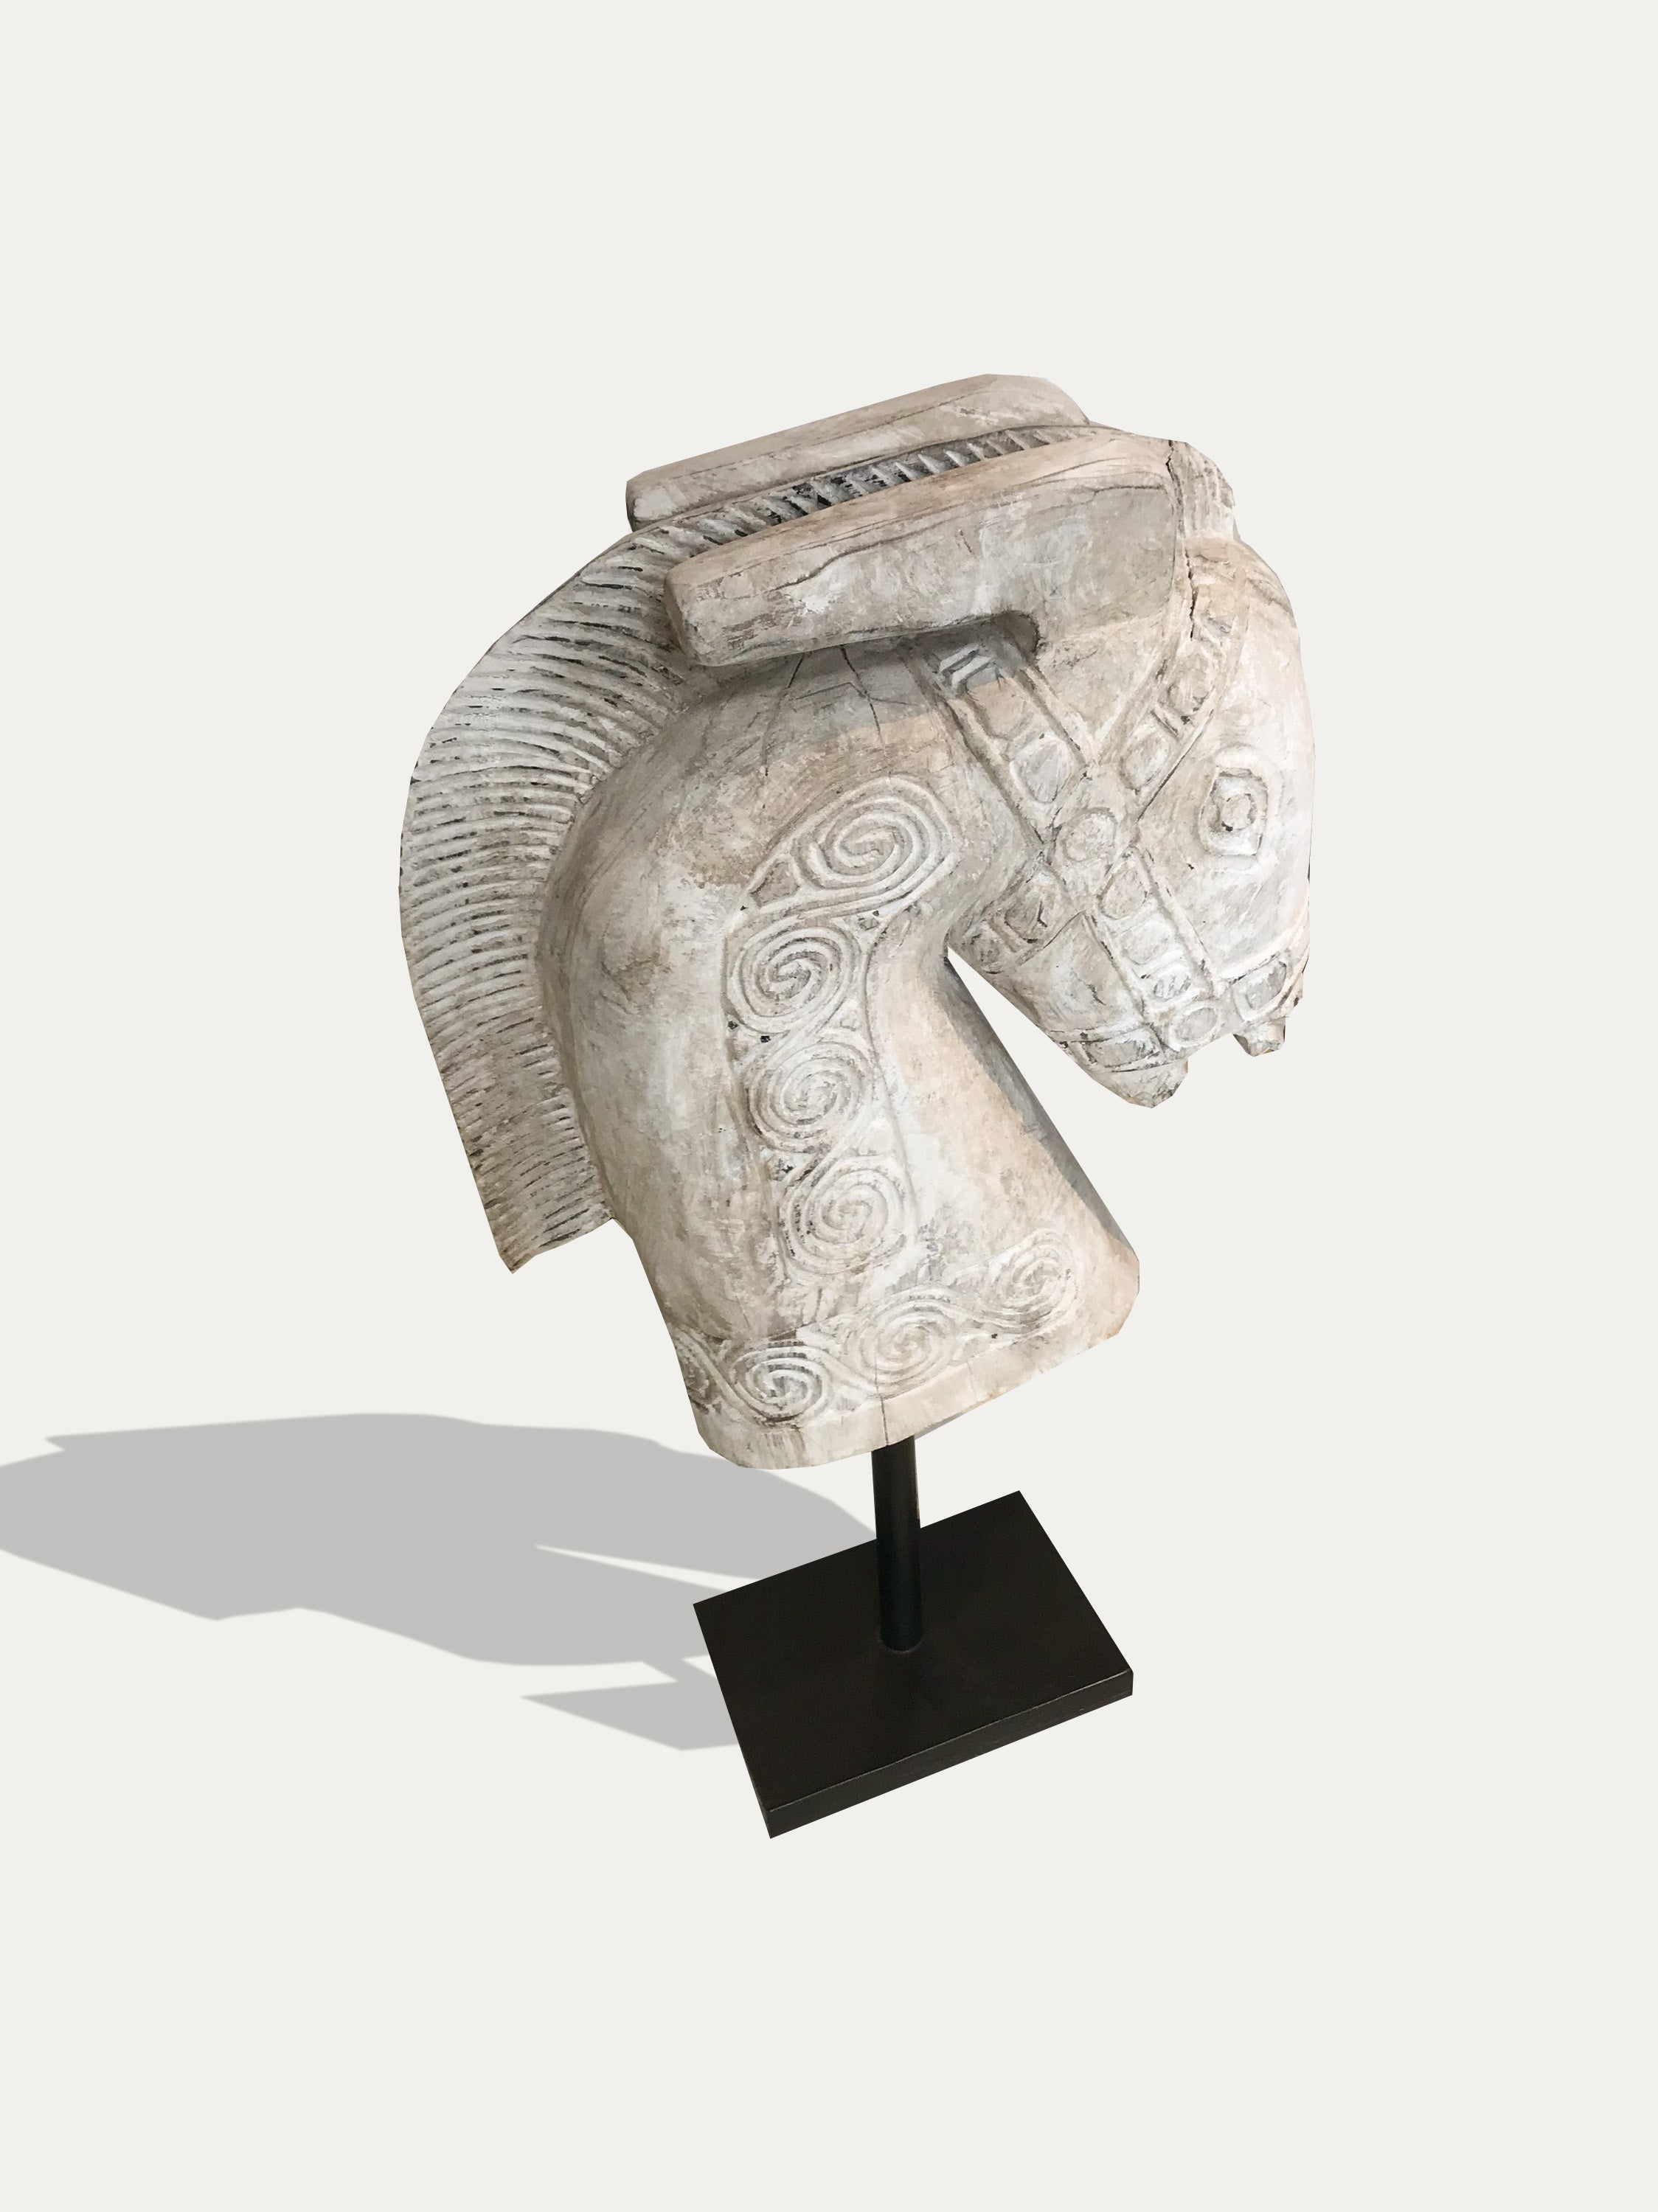 Kuda (Horse) Statue From Sumba - Asian art from Kirschon